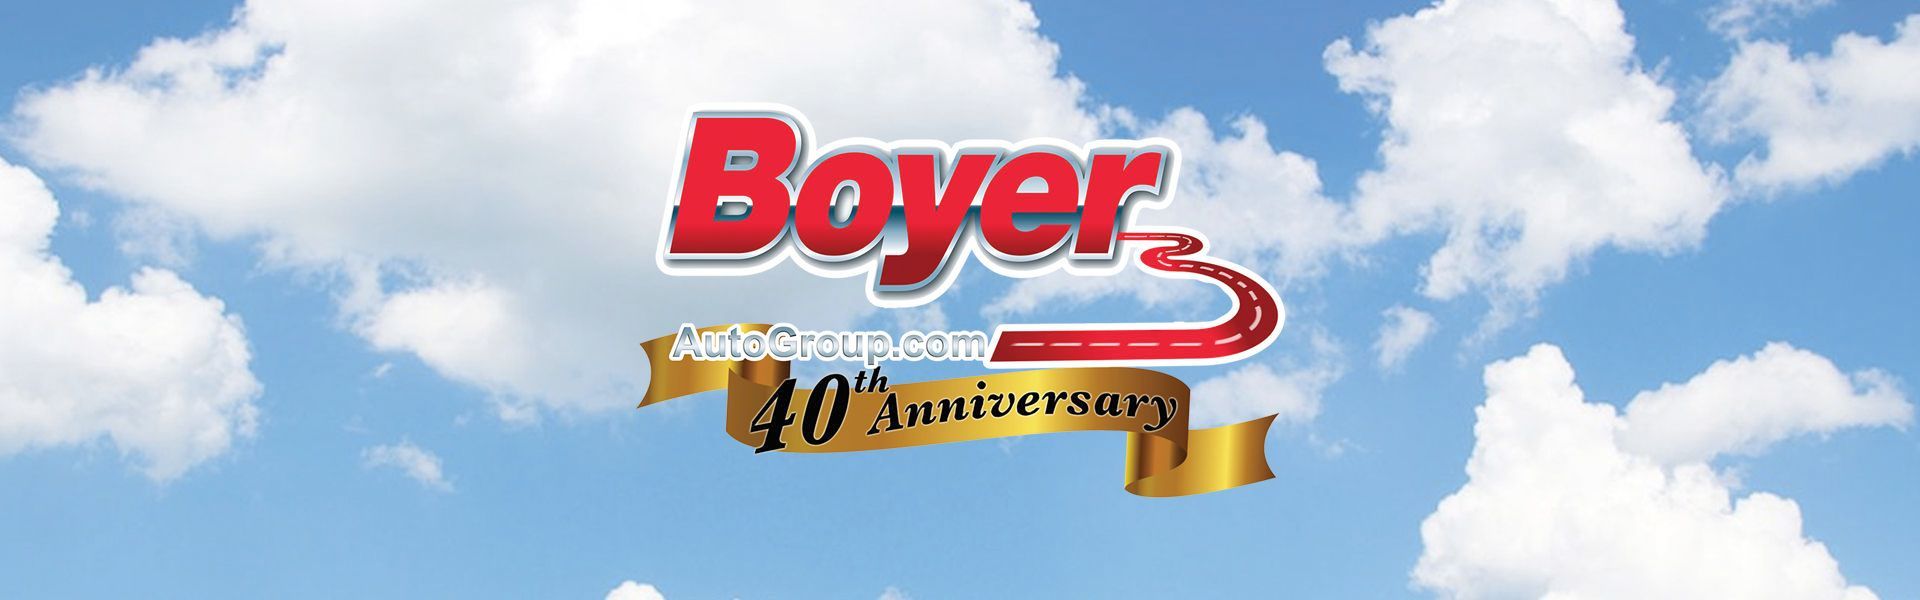 Boyer Auto Group 40th Anniversay